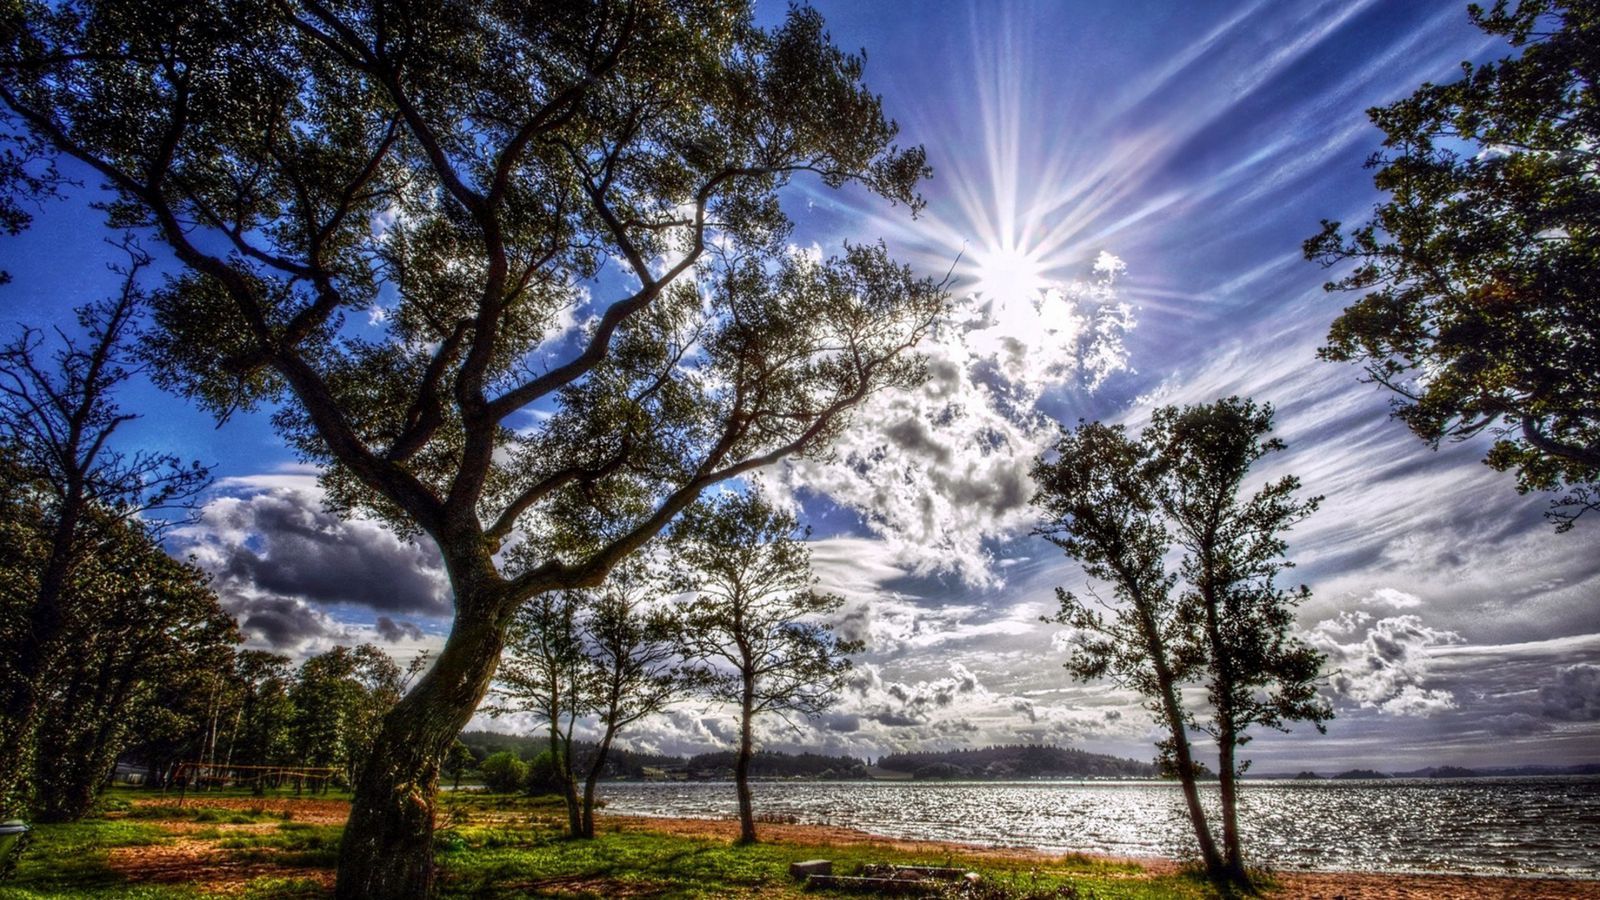 Download wallpaper 1600x900 sun, light, clouds, colors, trees